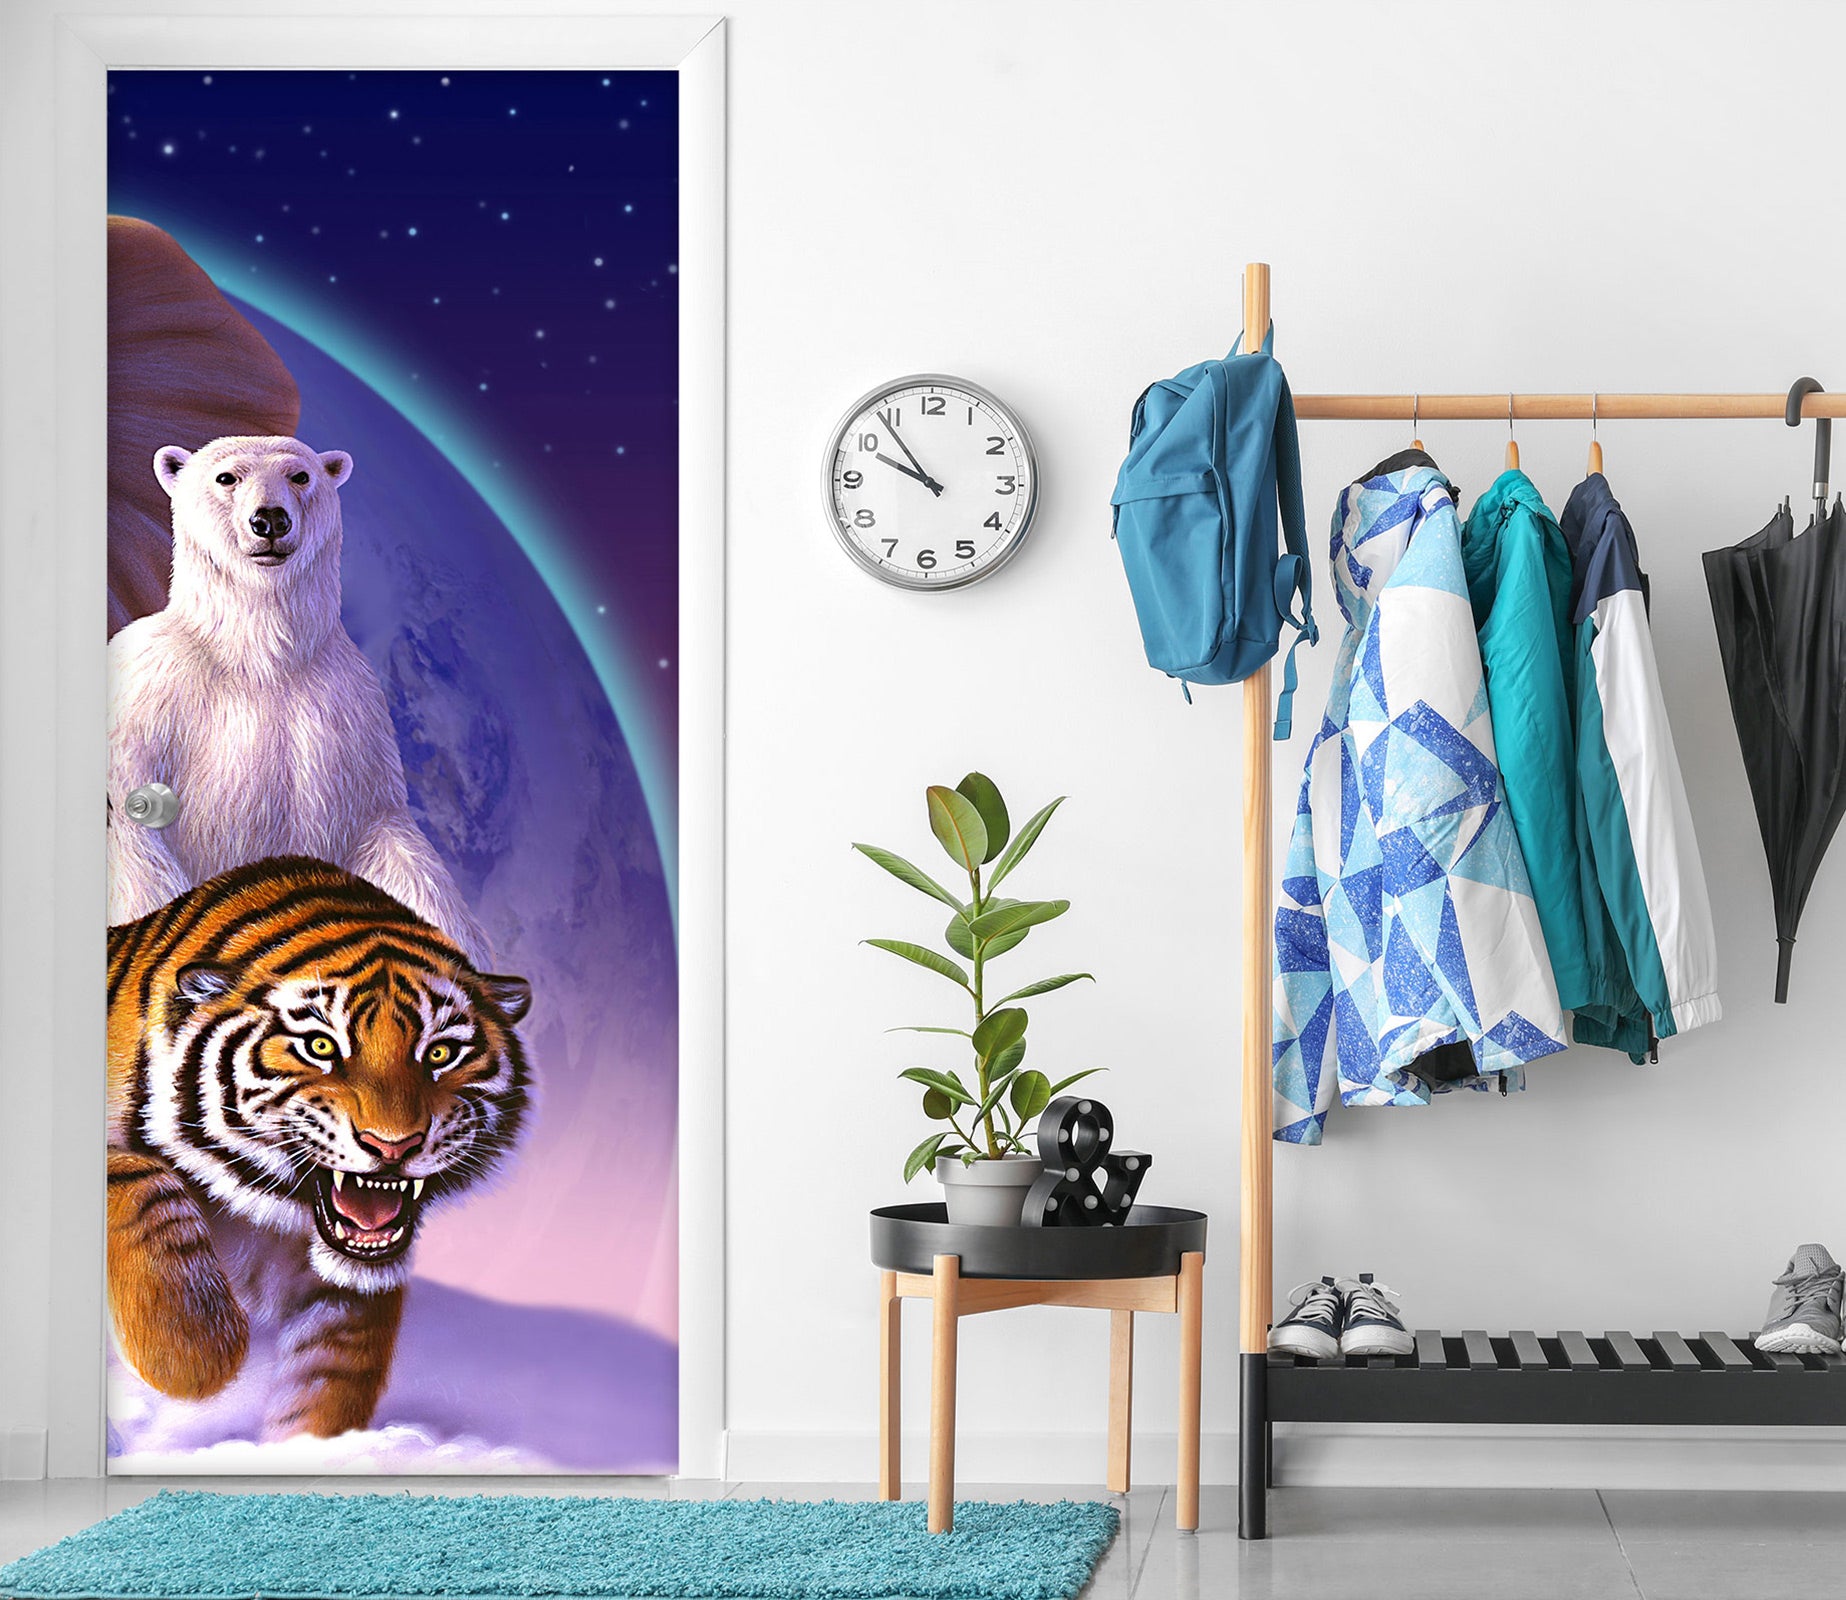 3D Polar Bear Tiger 112163 Jerry LoFaro Door Mural